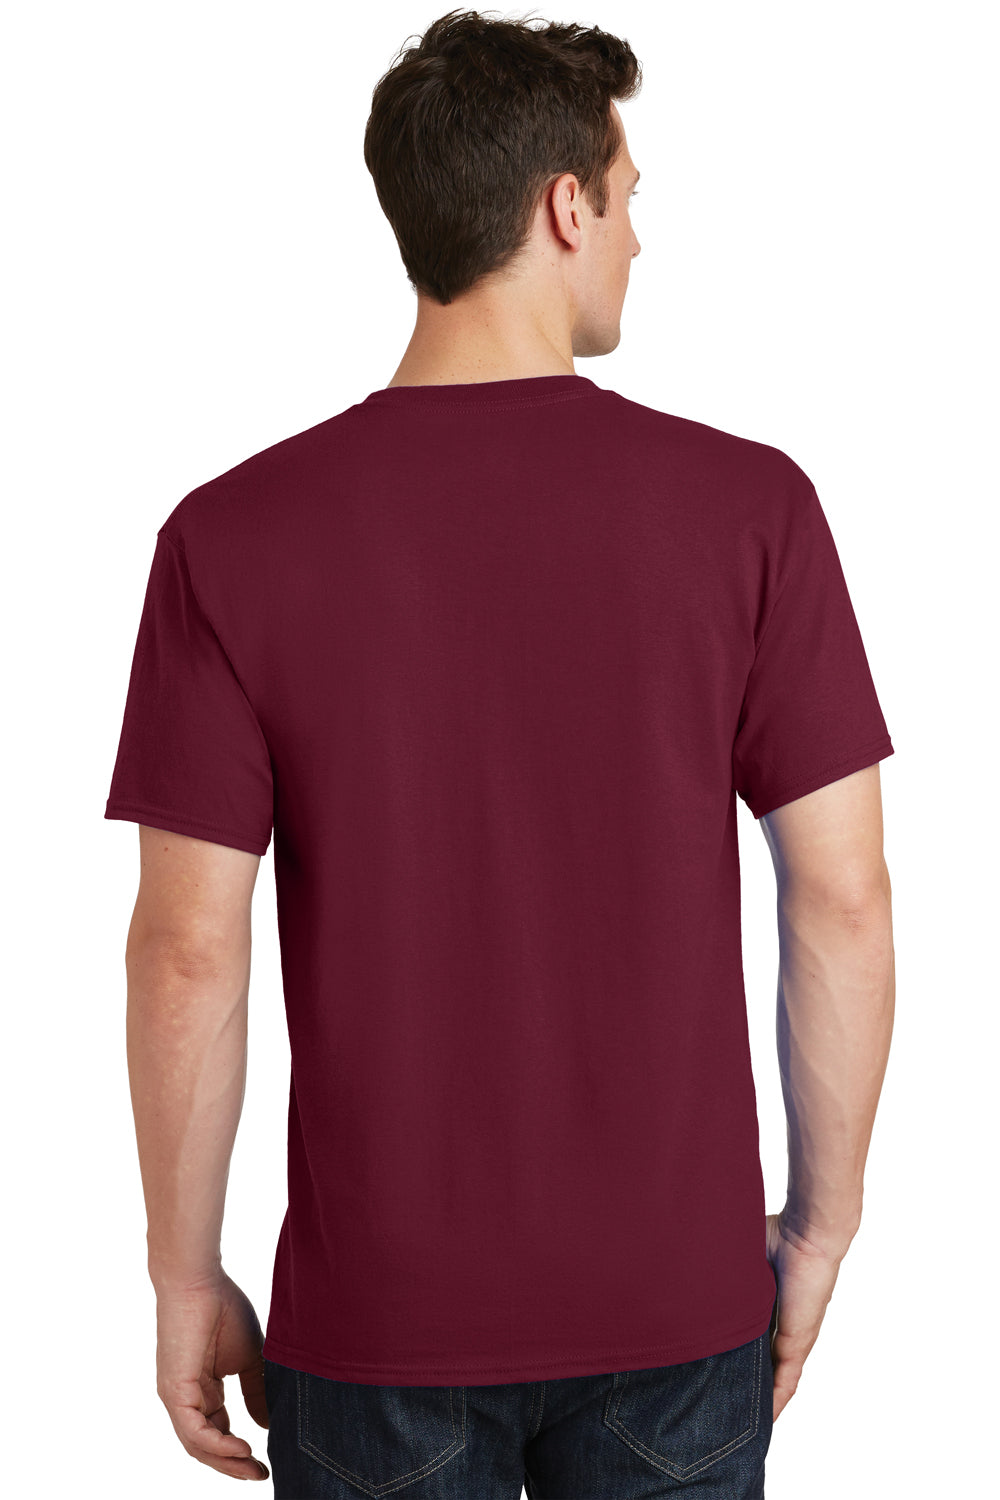 Port & Company PC54 Mens Core Short Sleeve Crewneck T-Shirt Cardinal Red Back